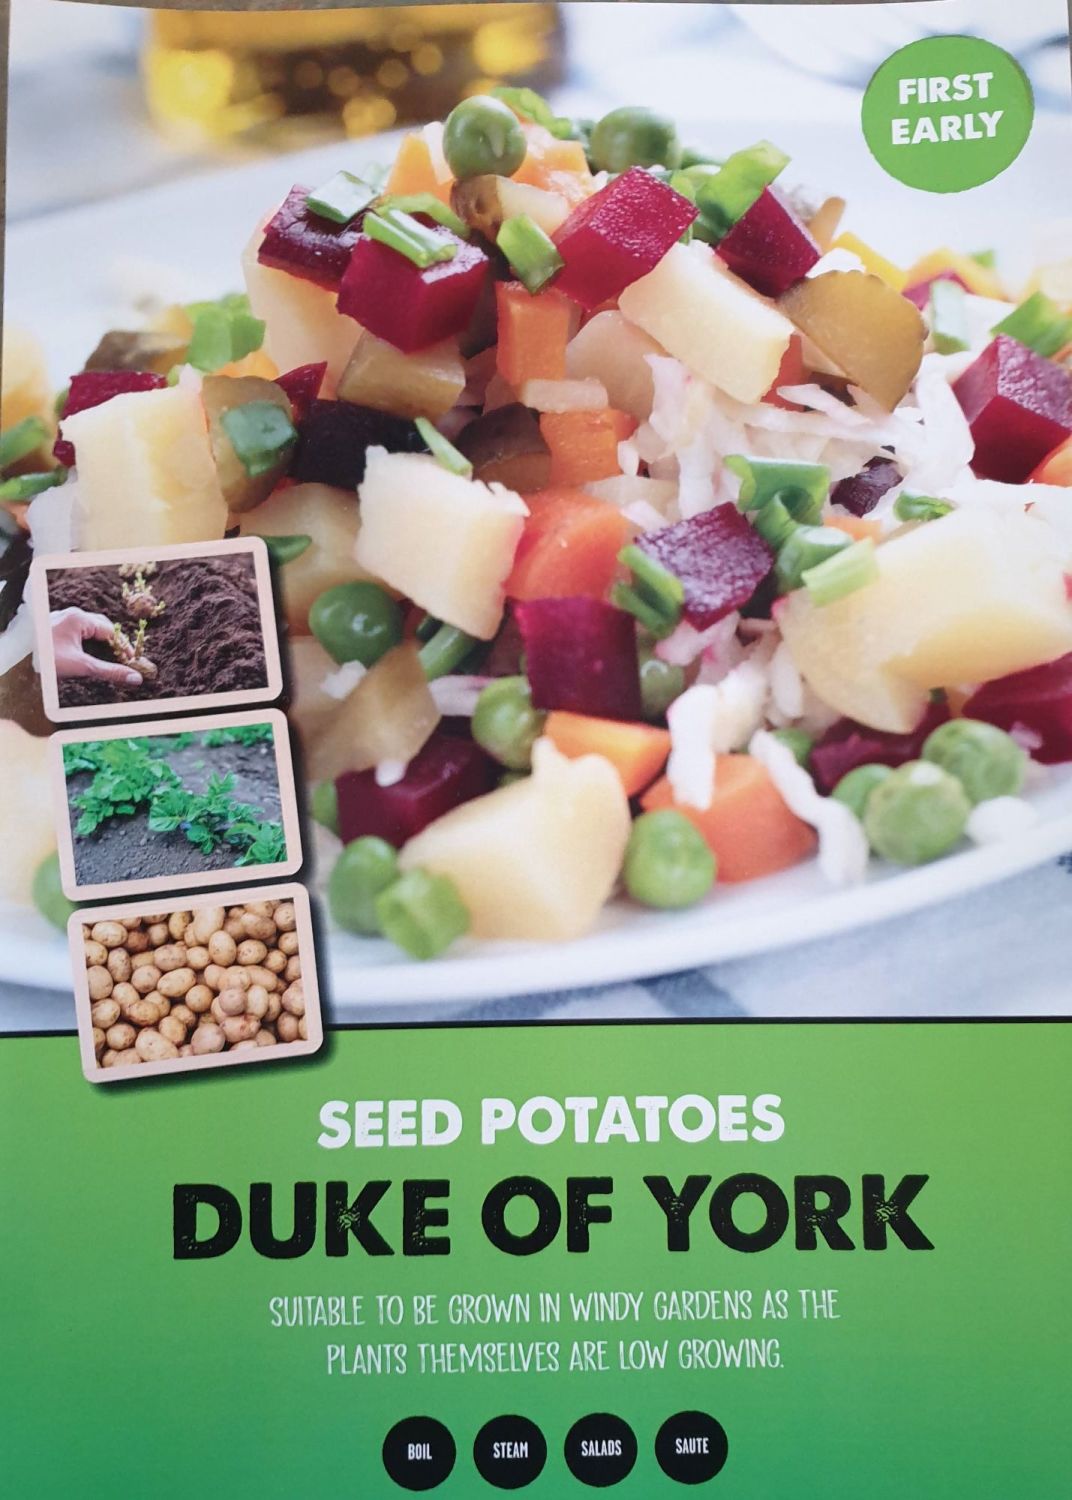 DUKE OF YORK 1st early seed potatoes